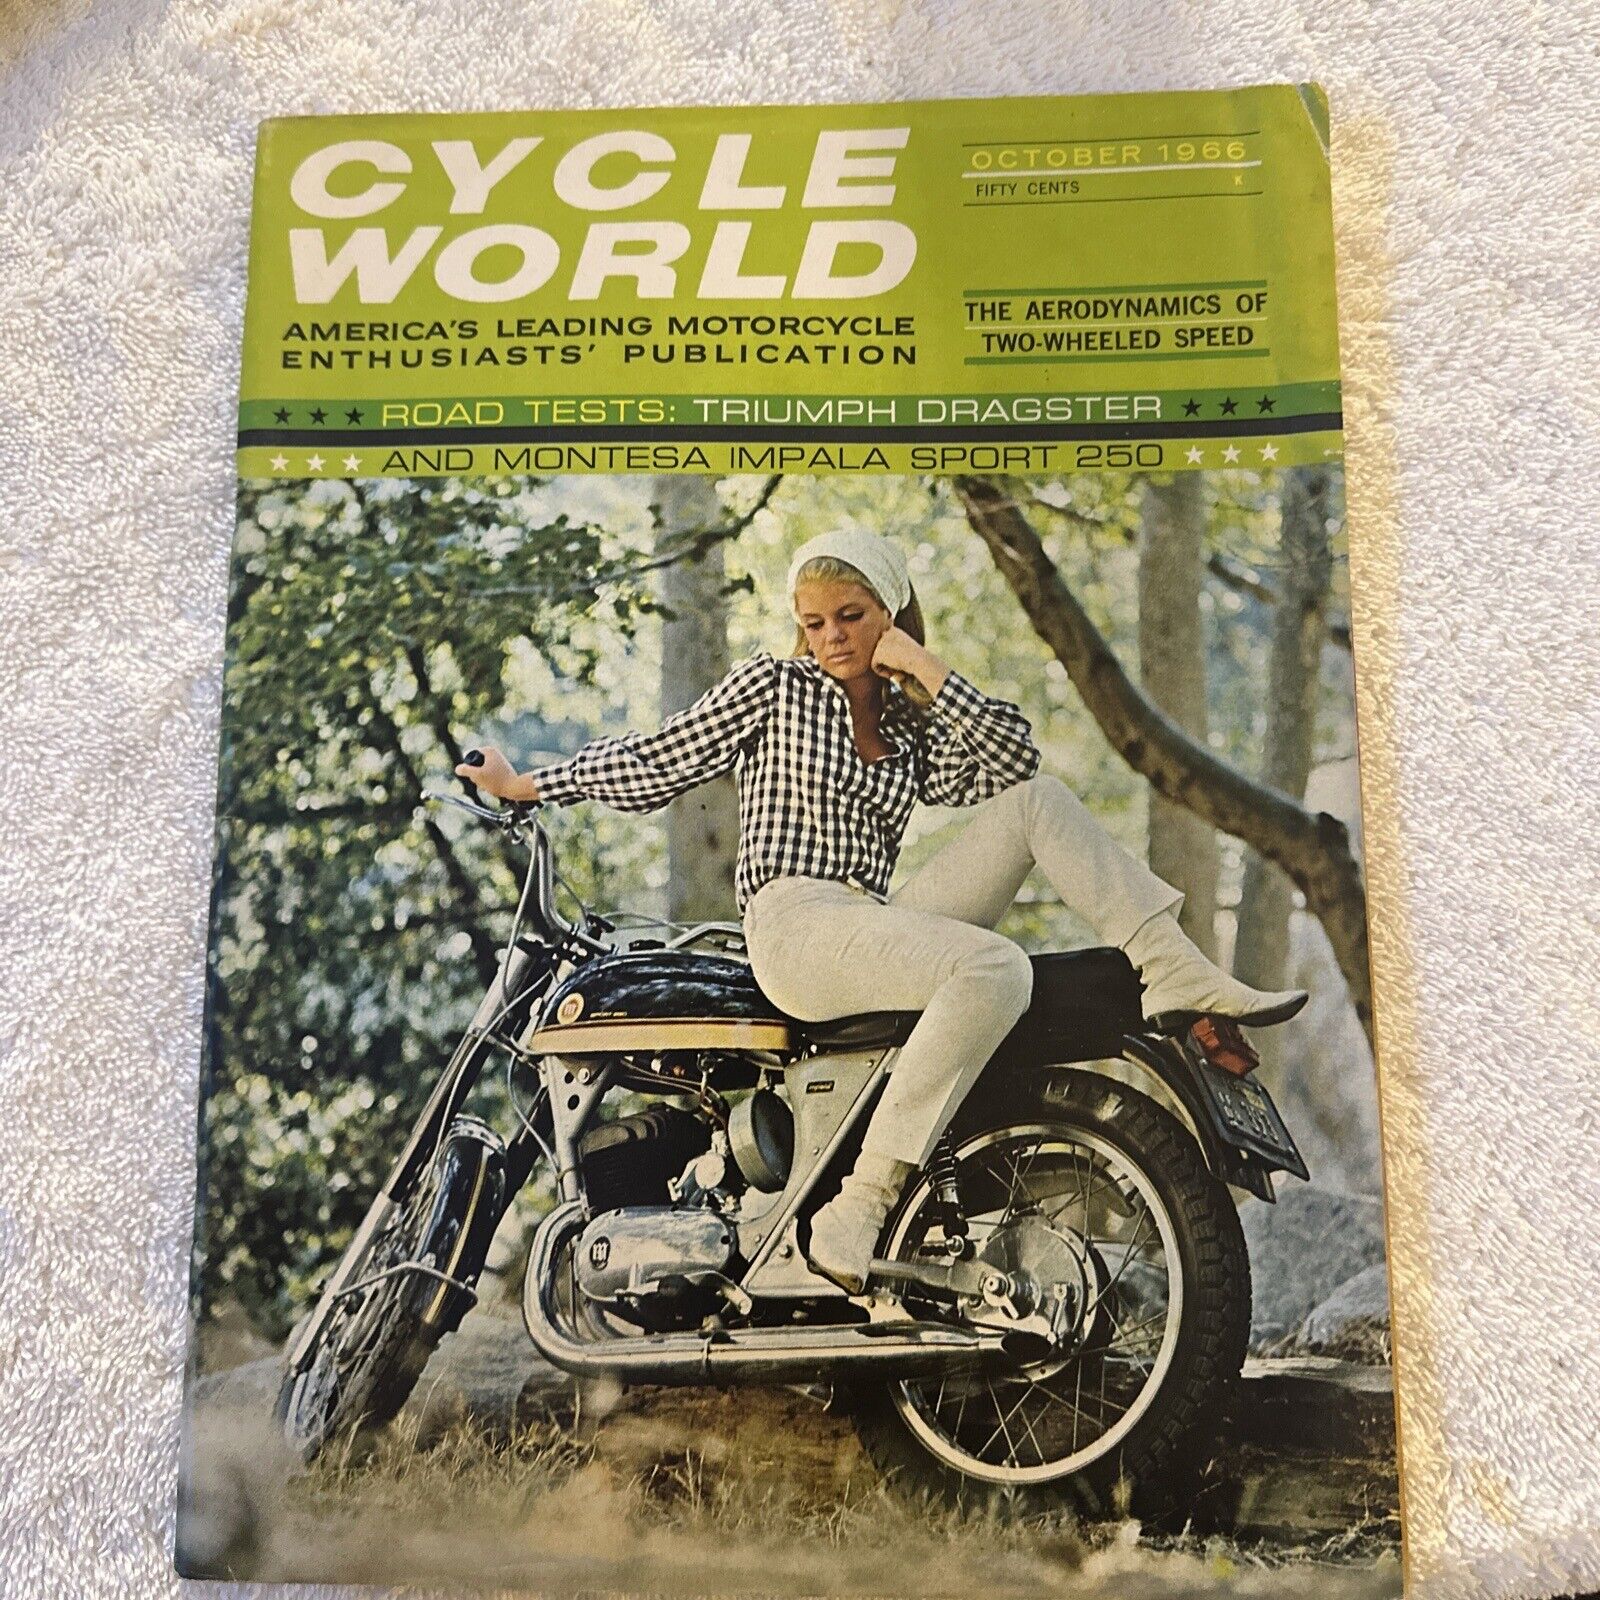 OCTOBER 1966 CYCLE WORLD vintage motorcycle magazine